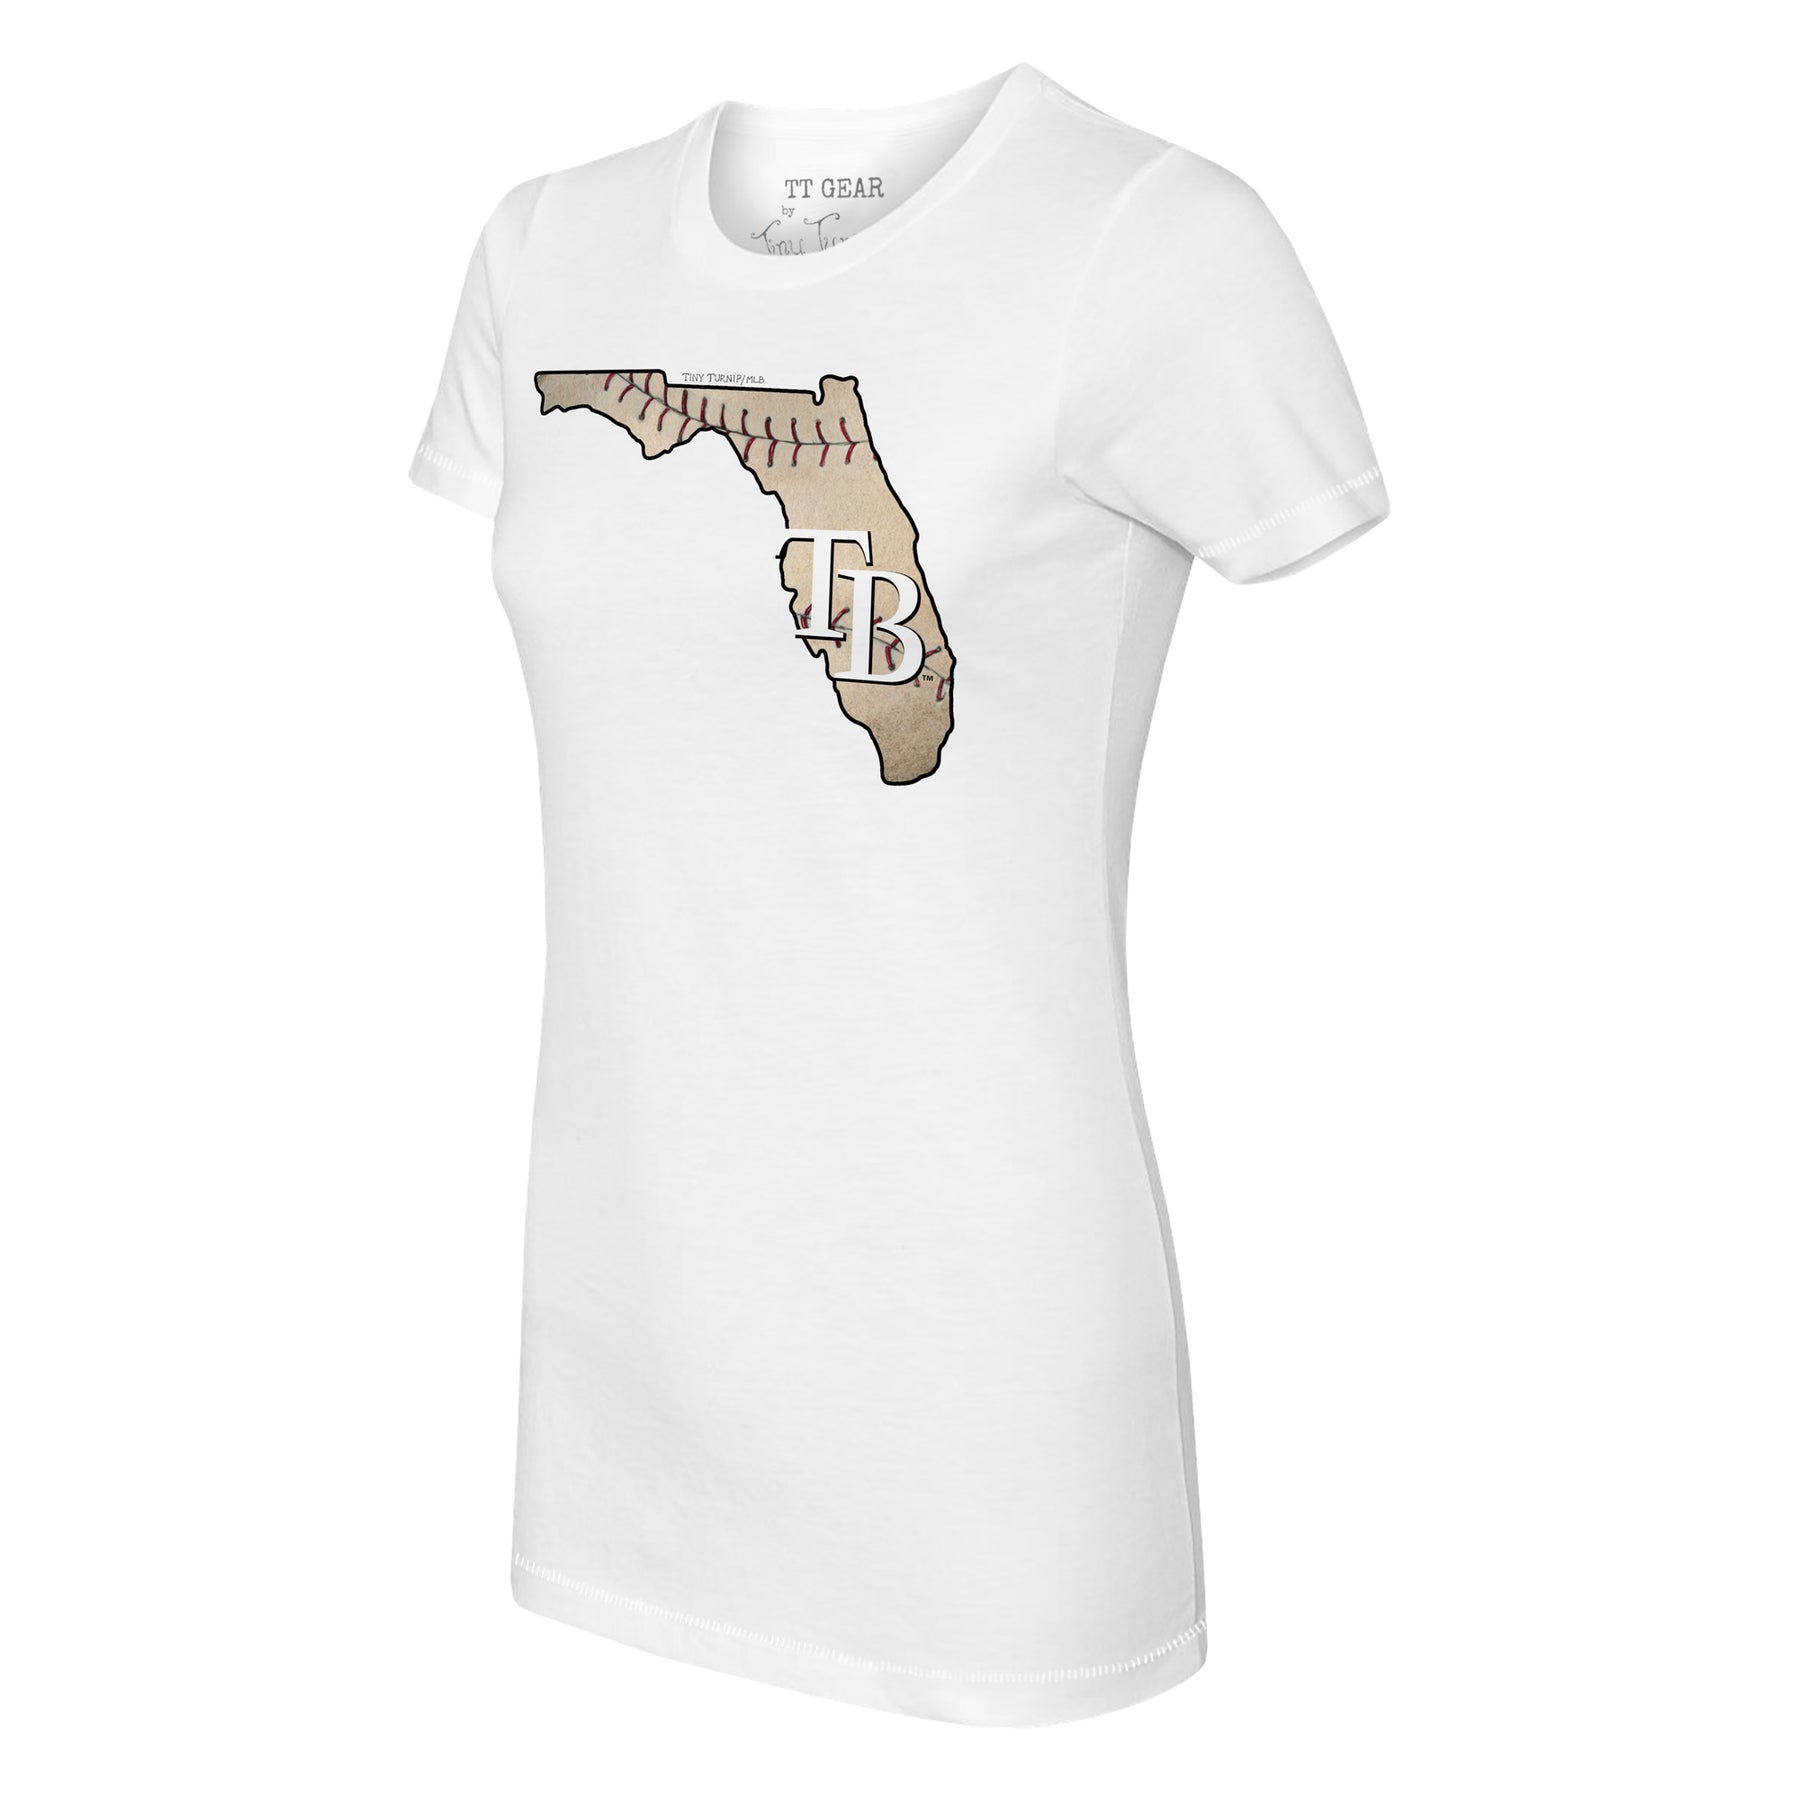 Tampa Bay Rays State Outline Tee Shirt